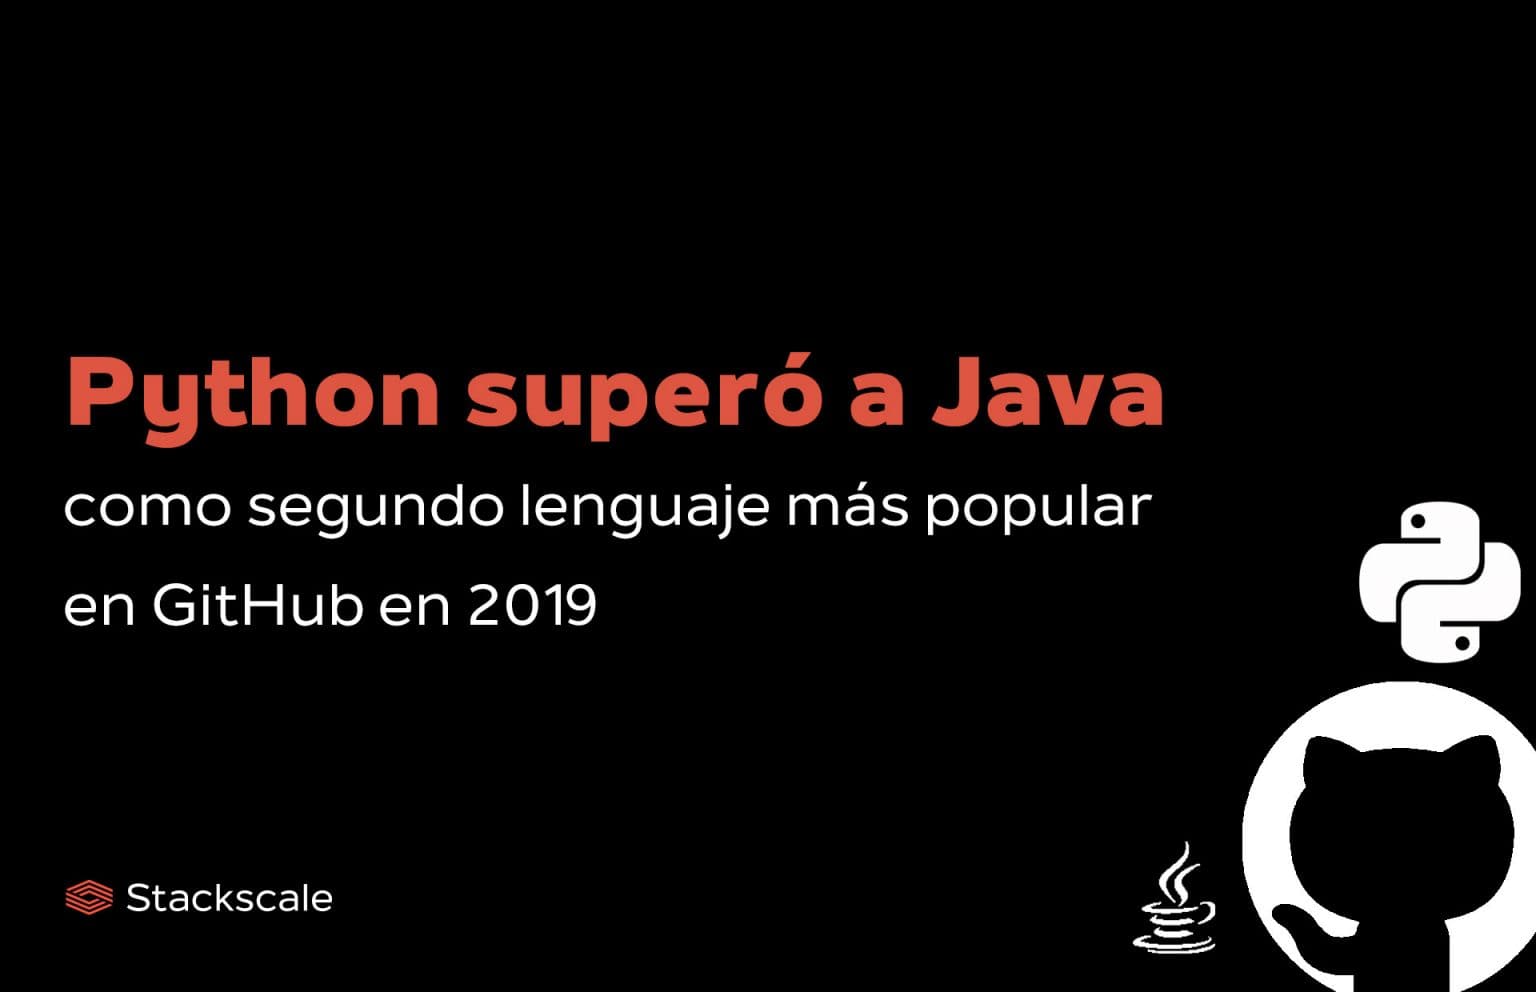 Python supera a Java en el ranking de lenguajes de programación en número de colaboradores en repositorios en GitHub en 2019